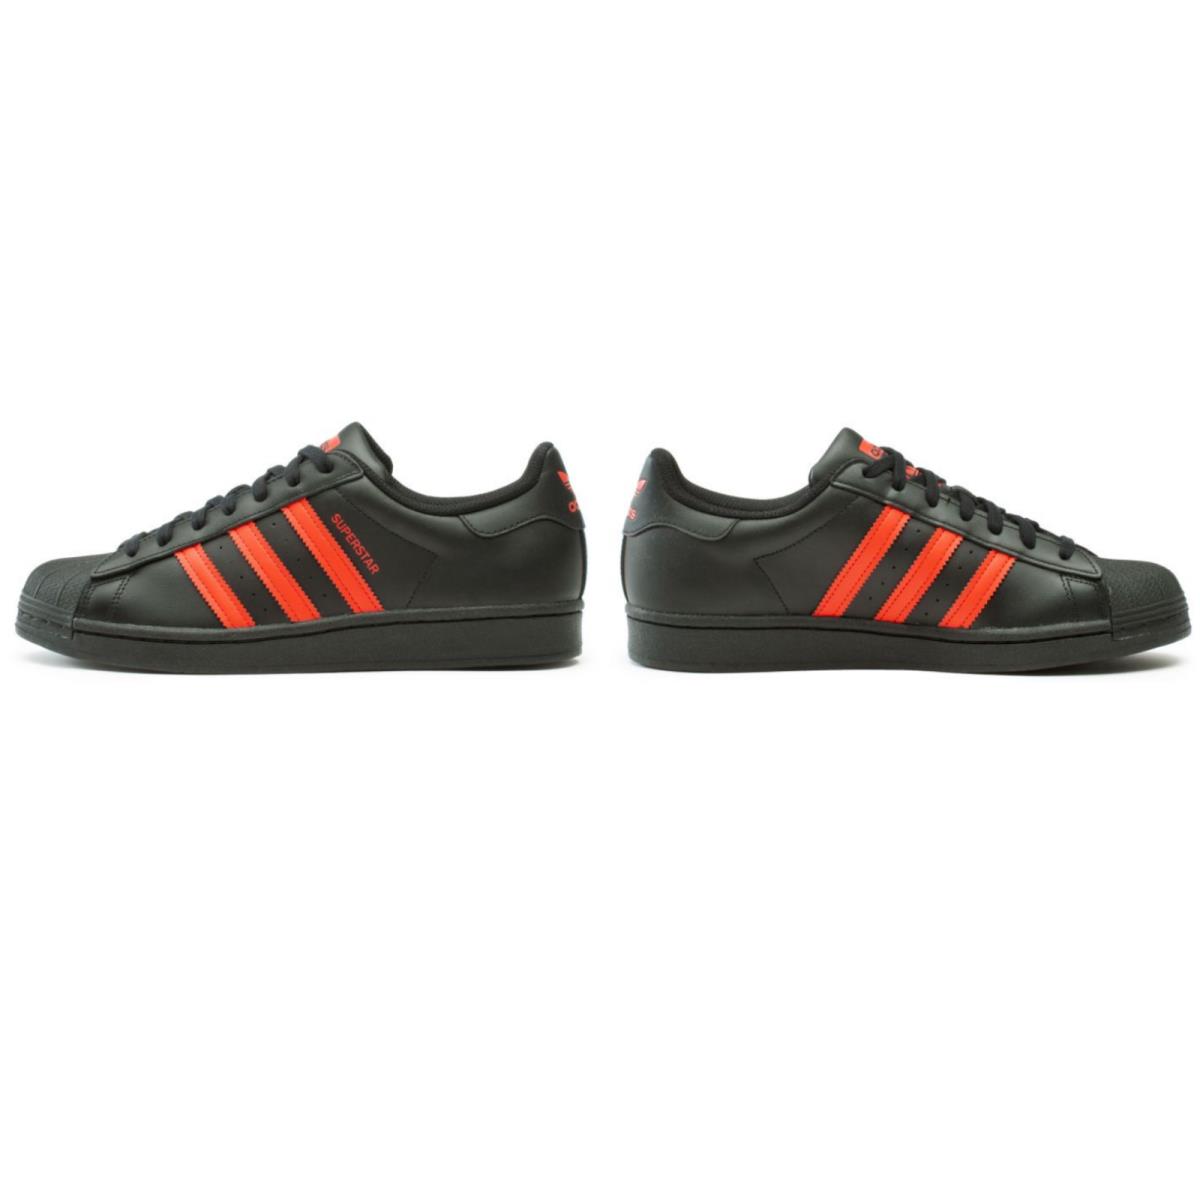 Adidas Superstar Men Sneakers Shoe Size 11.5 US